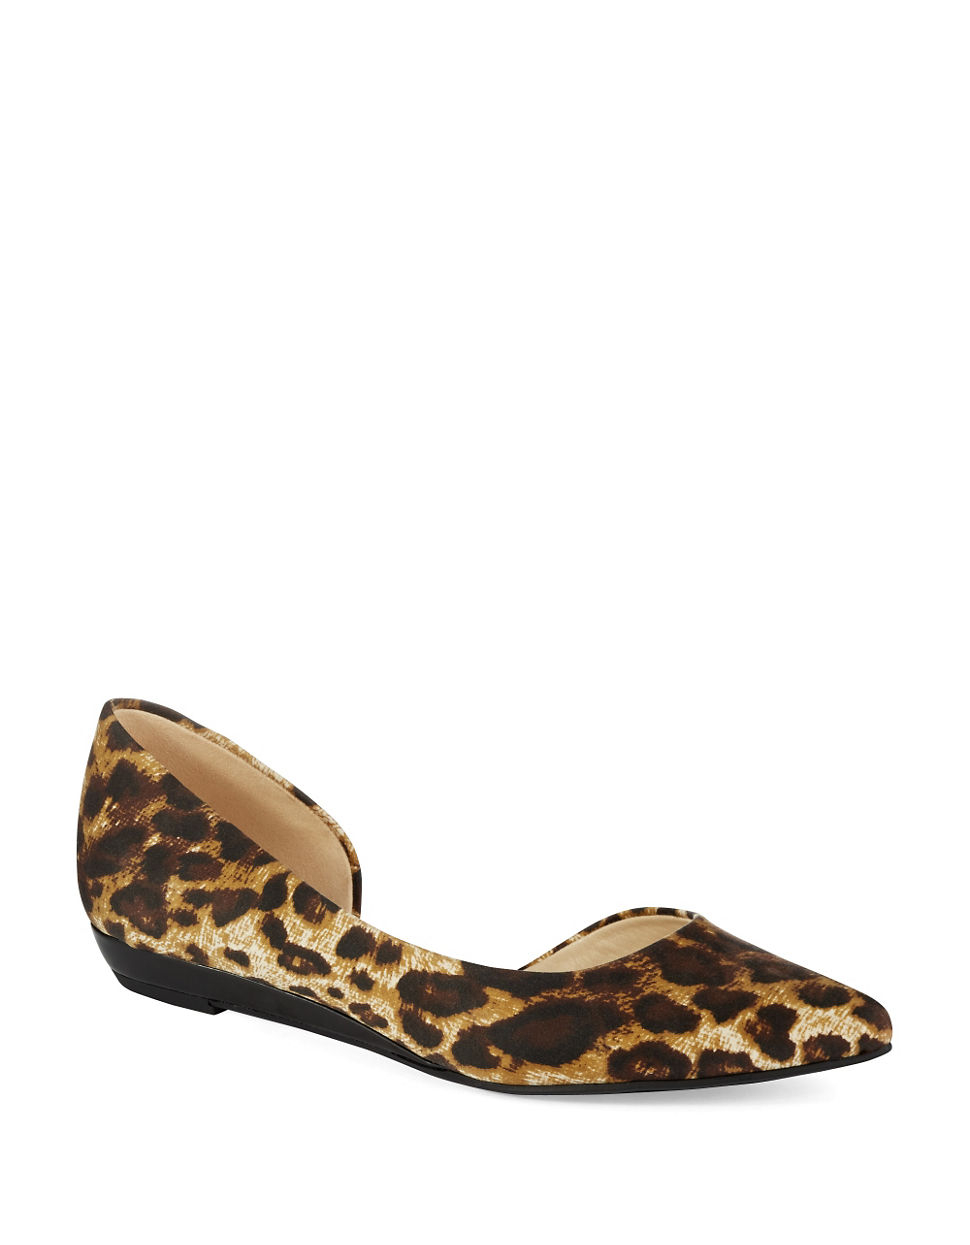 Anne Klein Kezia Pointed Toe Flats in Animal (Leopard Print) | Lyst